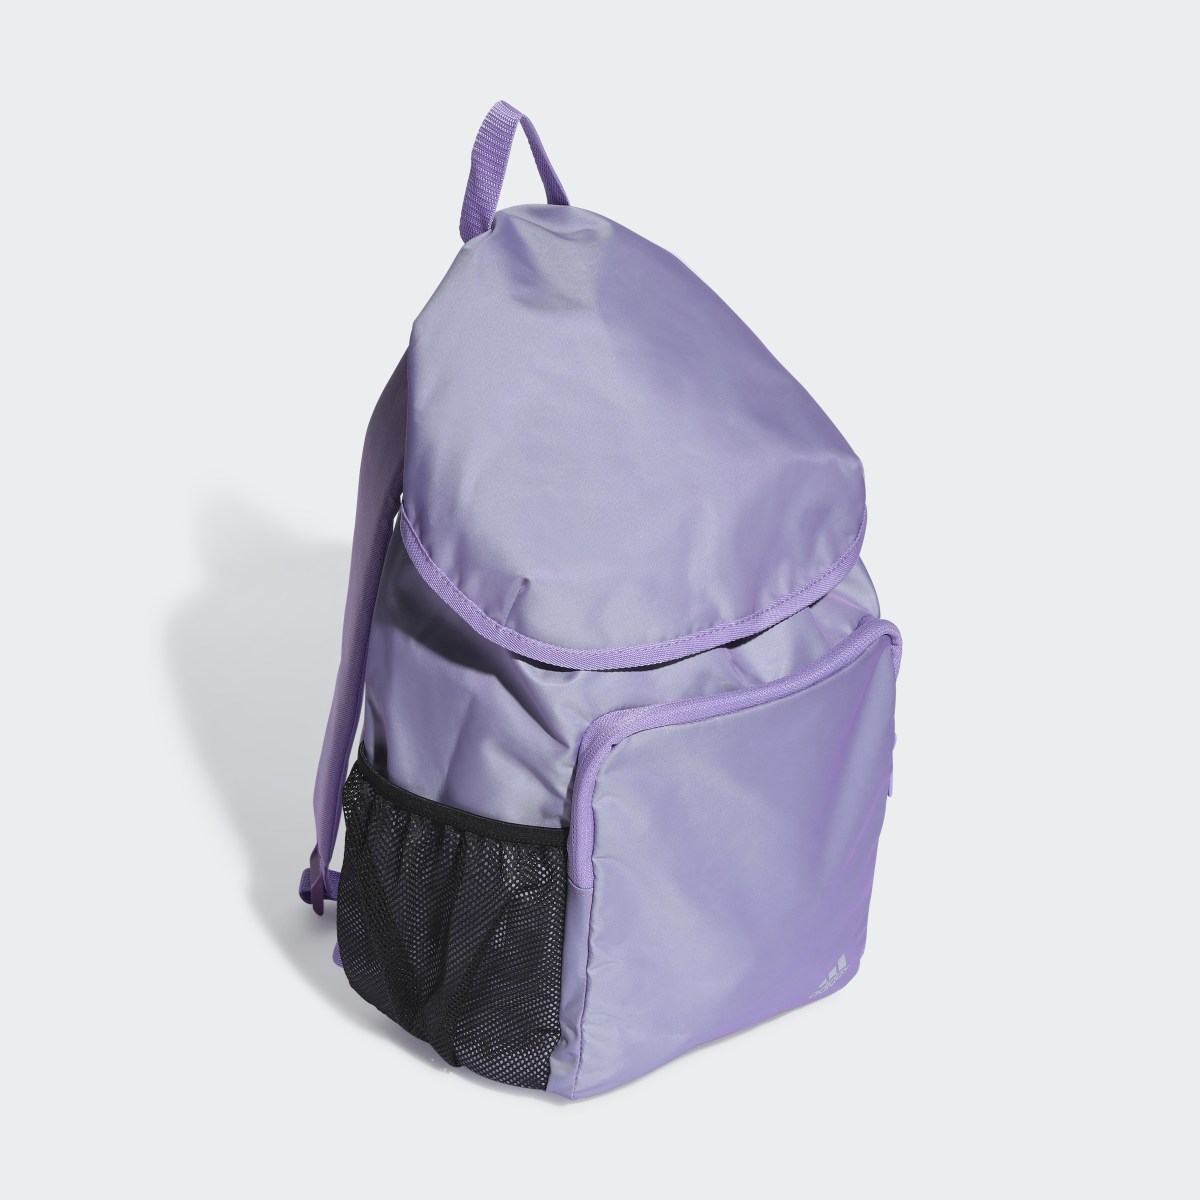 Adidas Dance Backpack. 4